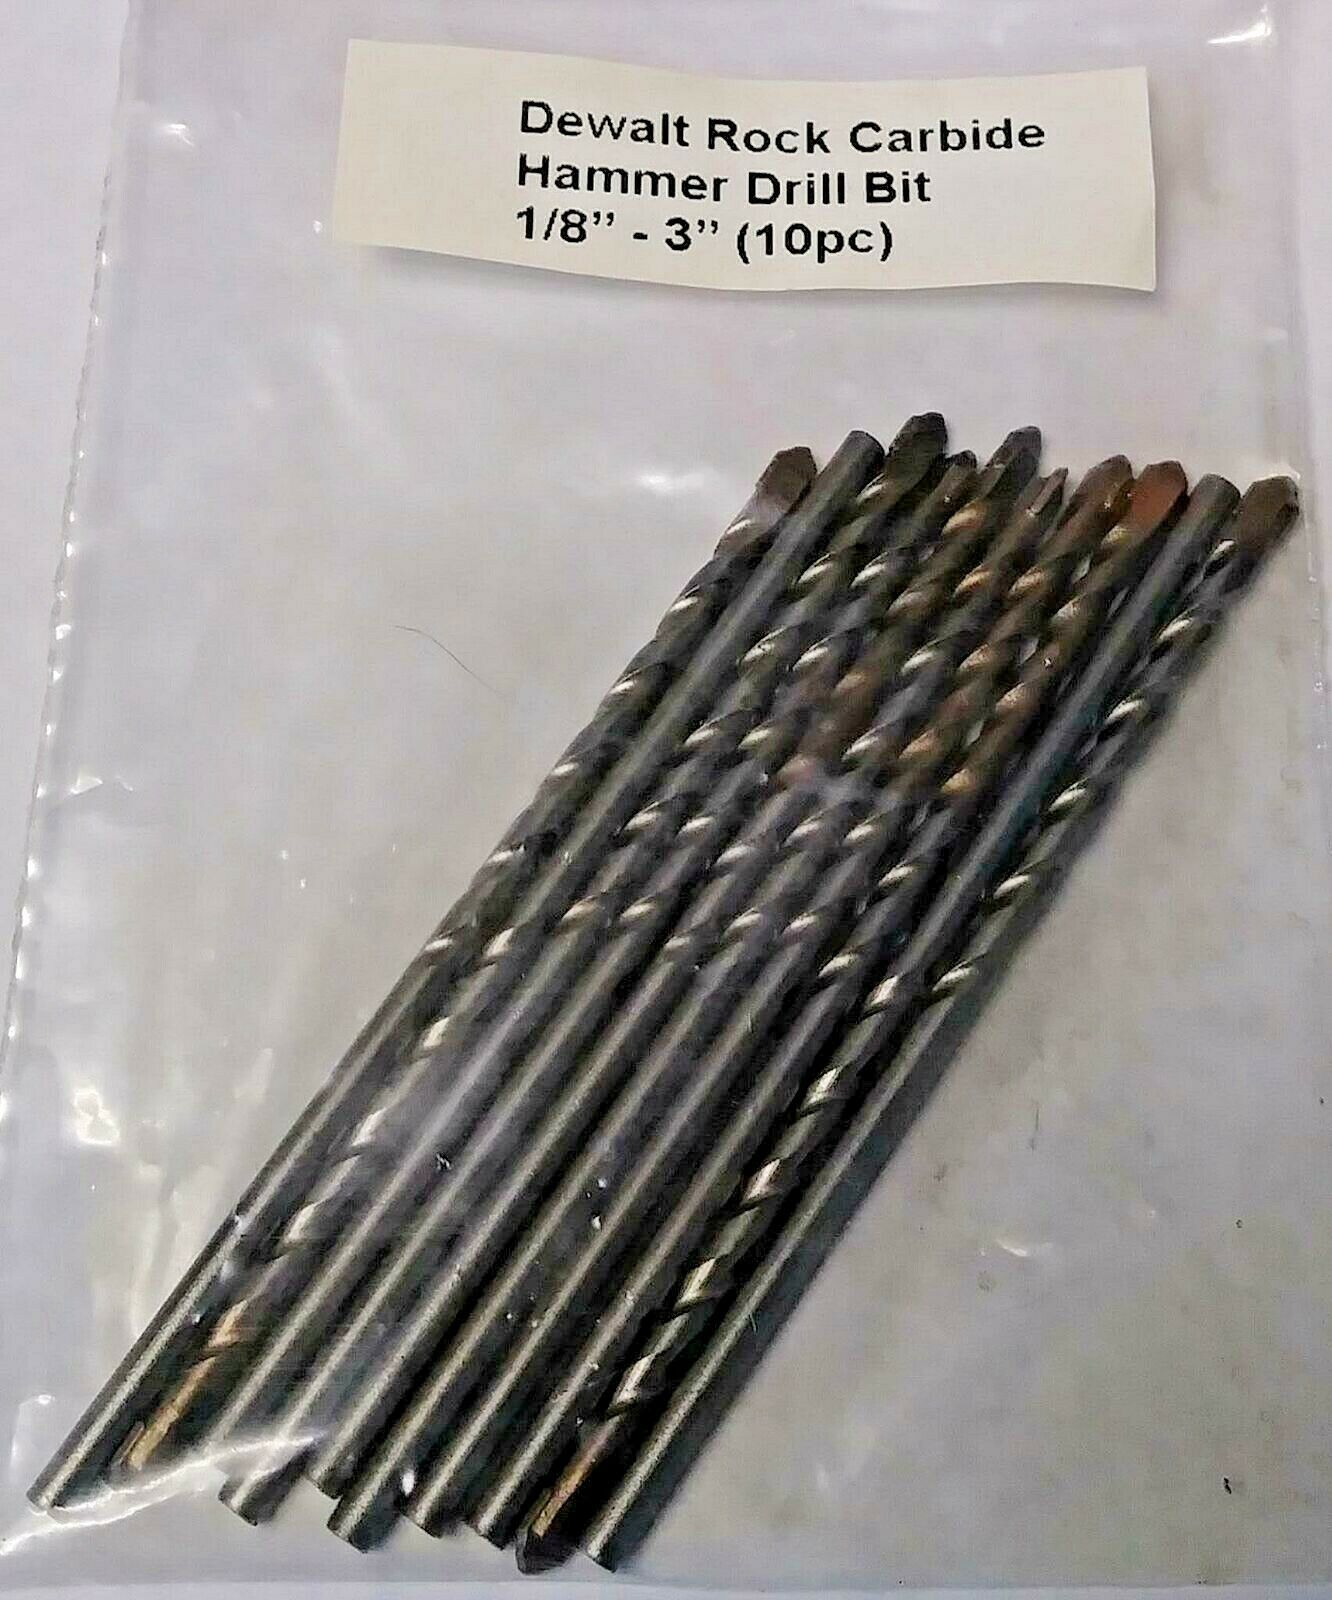 Dewalt 1/8" x 3" Rock Carbide Hammer Drill Bit 10 Pack Bulk